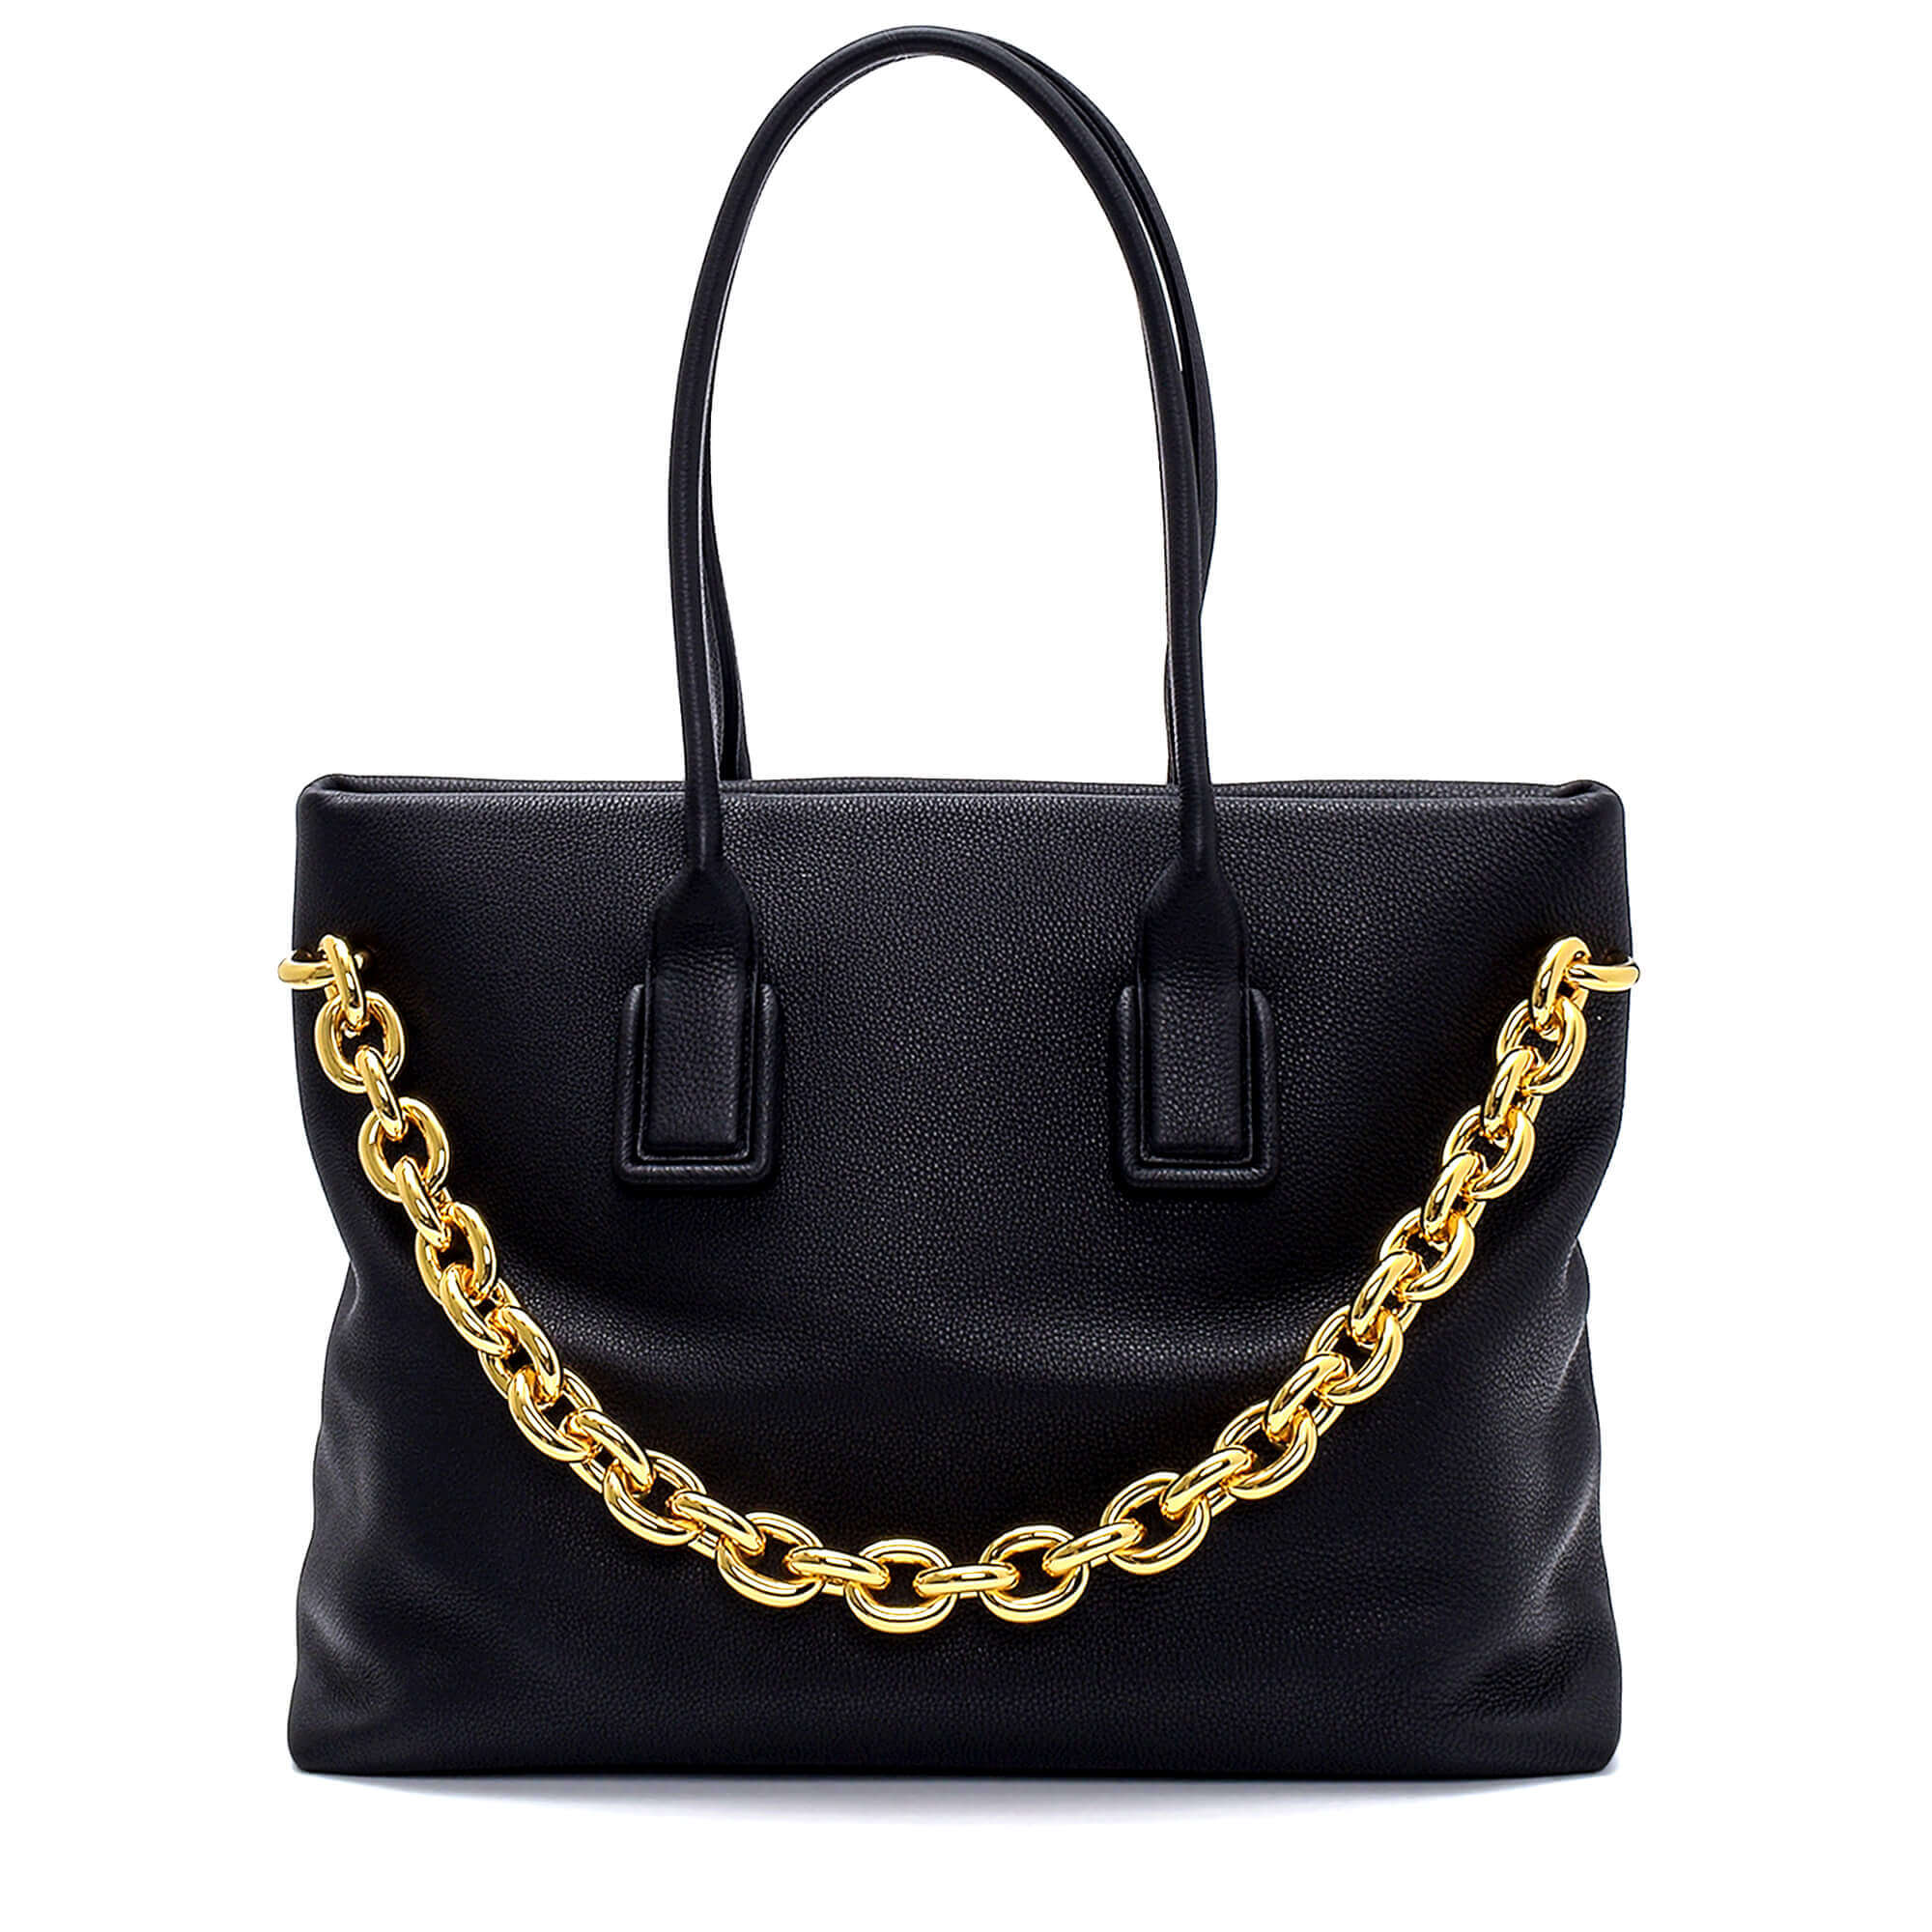 Bottega Veneta - Black Grained Leather Chain Embellished Tote Bag